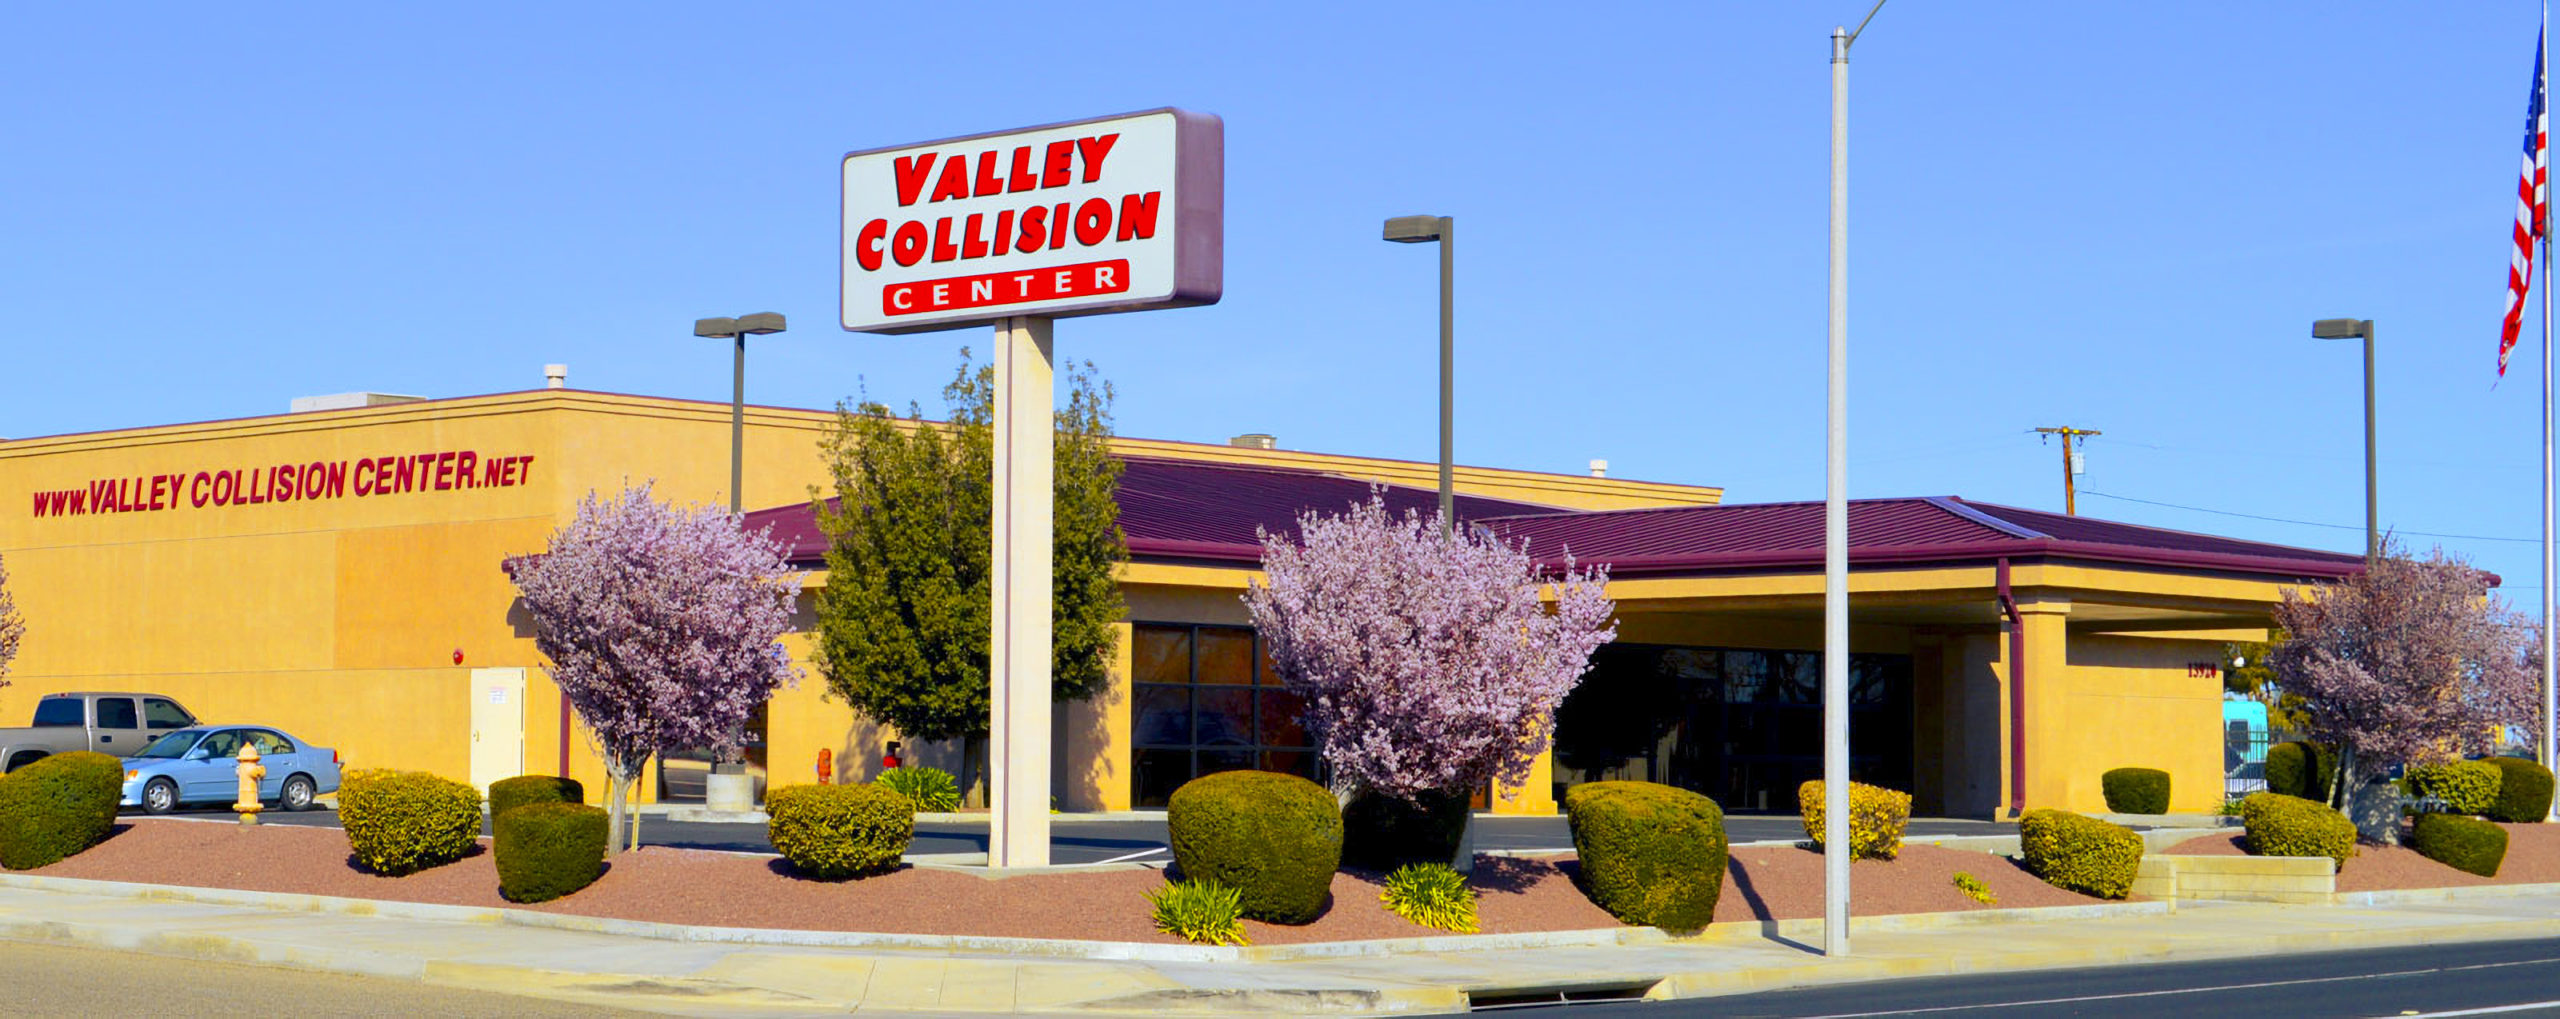 valley collision center location